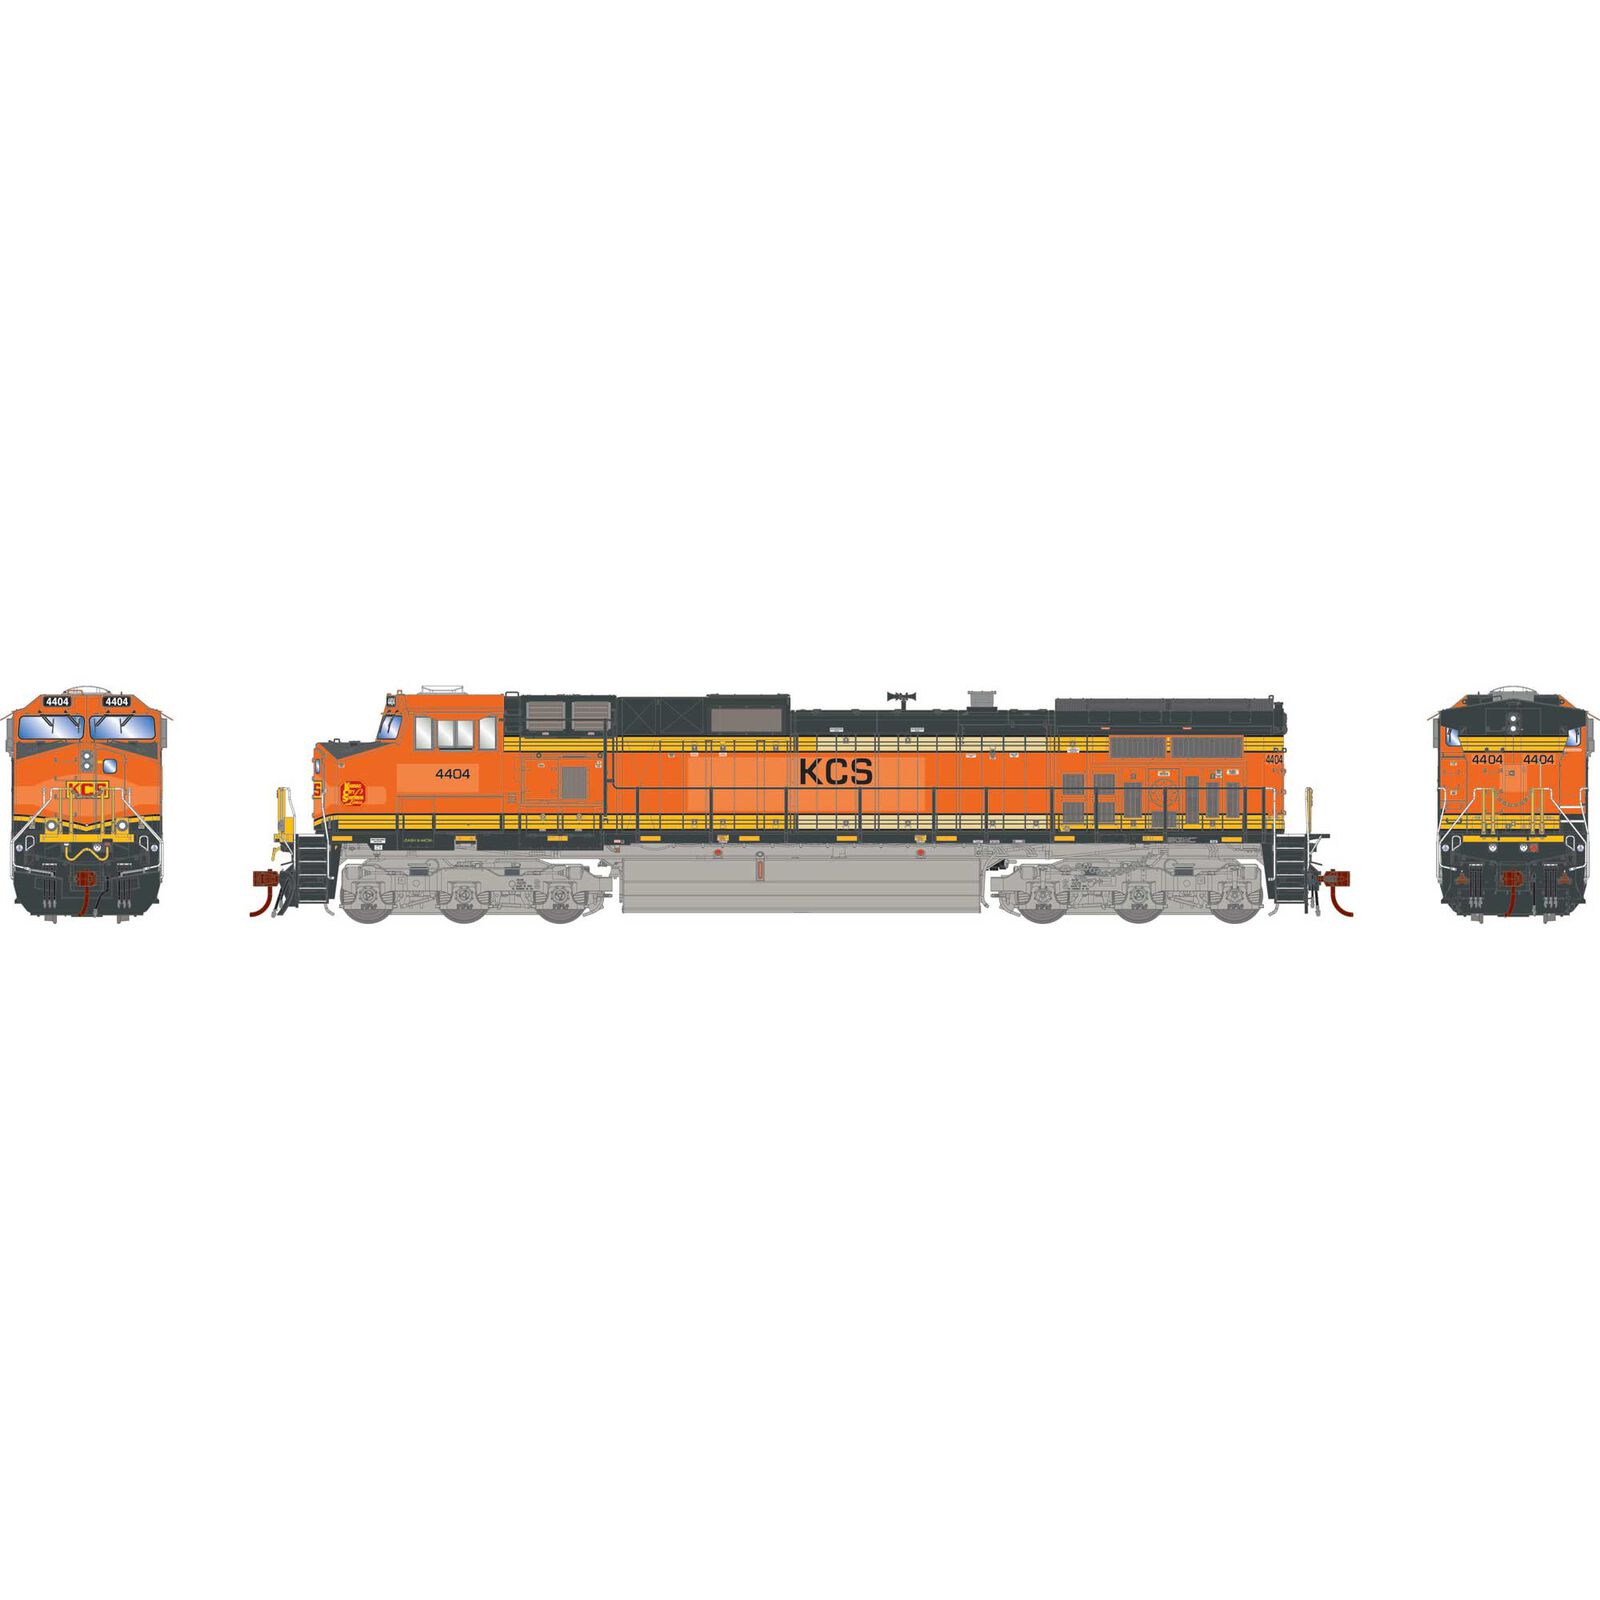 HO Dash 9-44CW Locomotive, KCS #4404